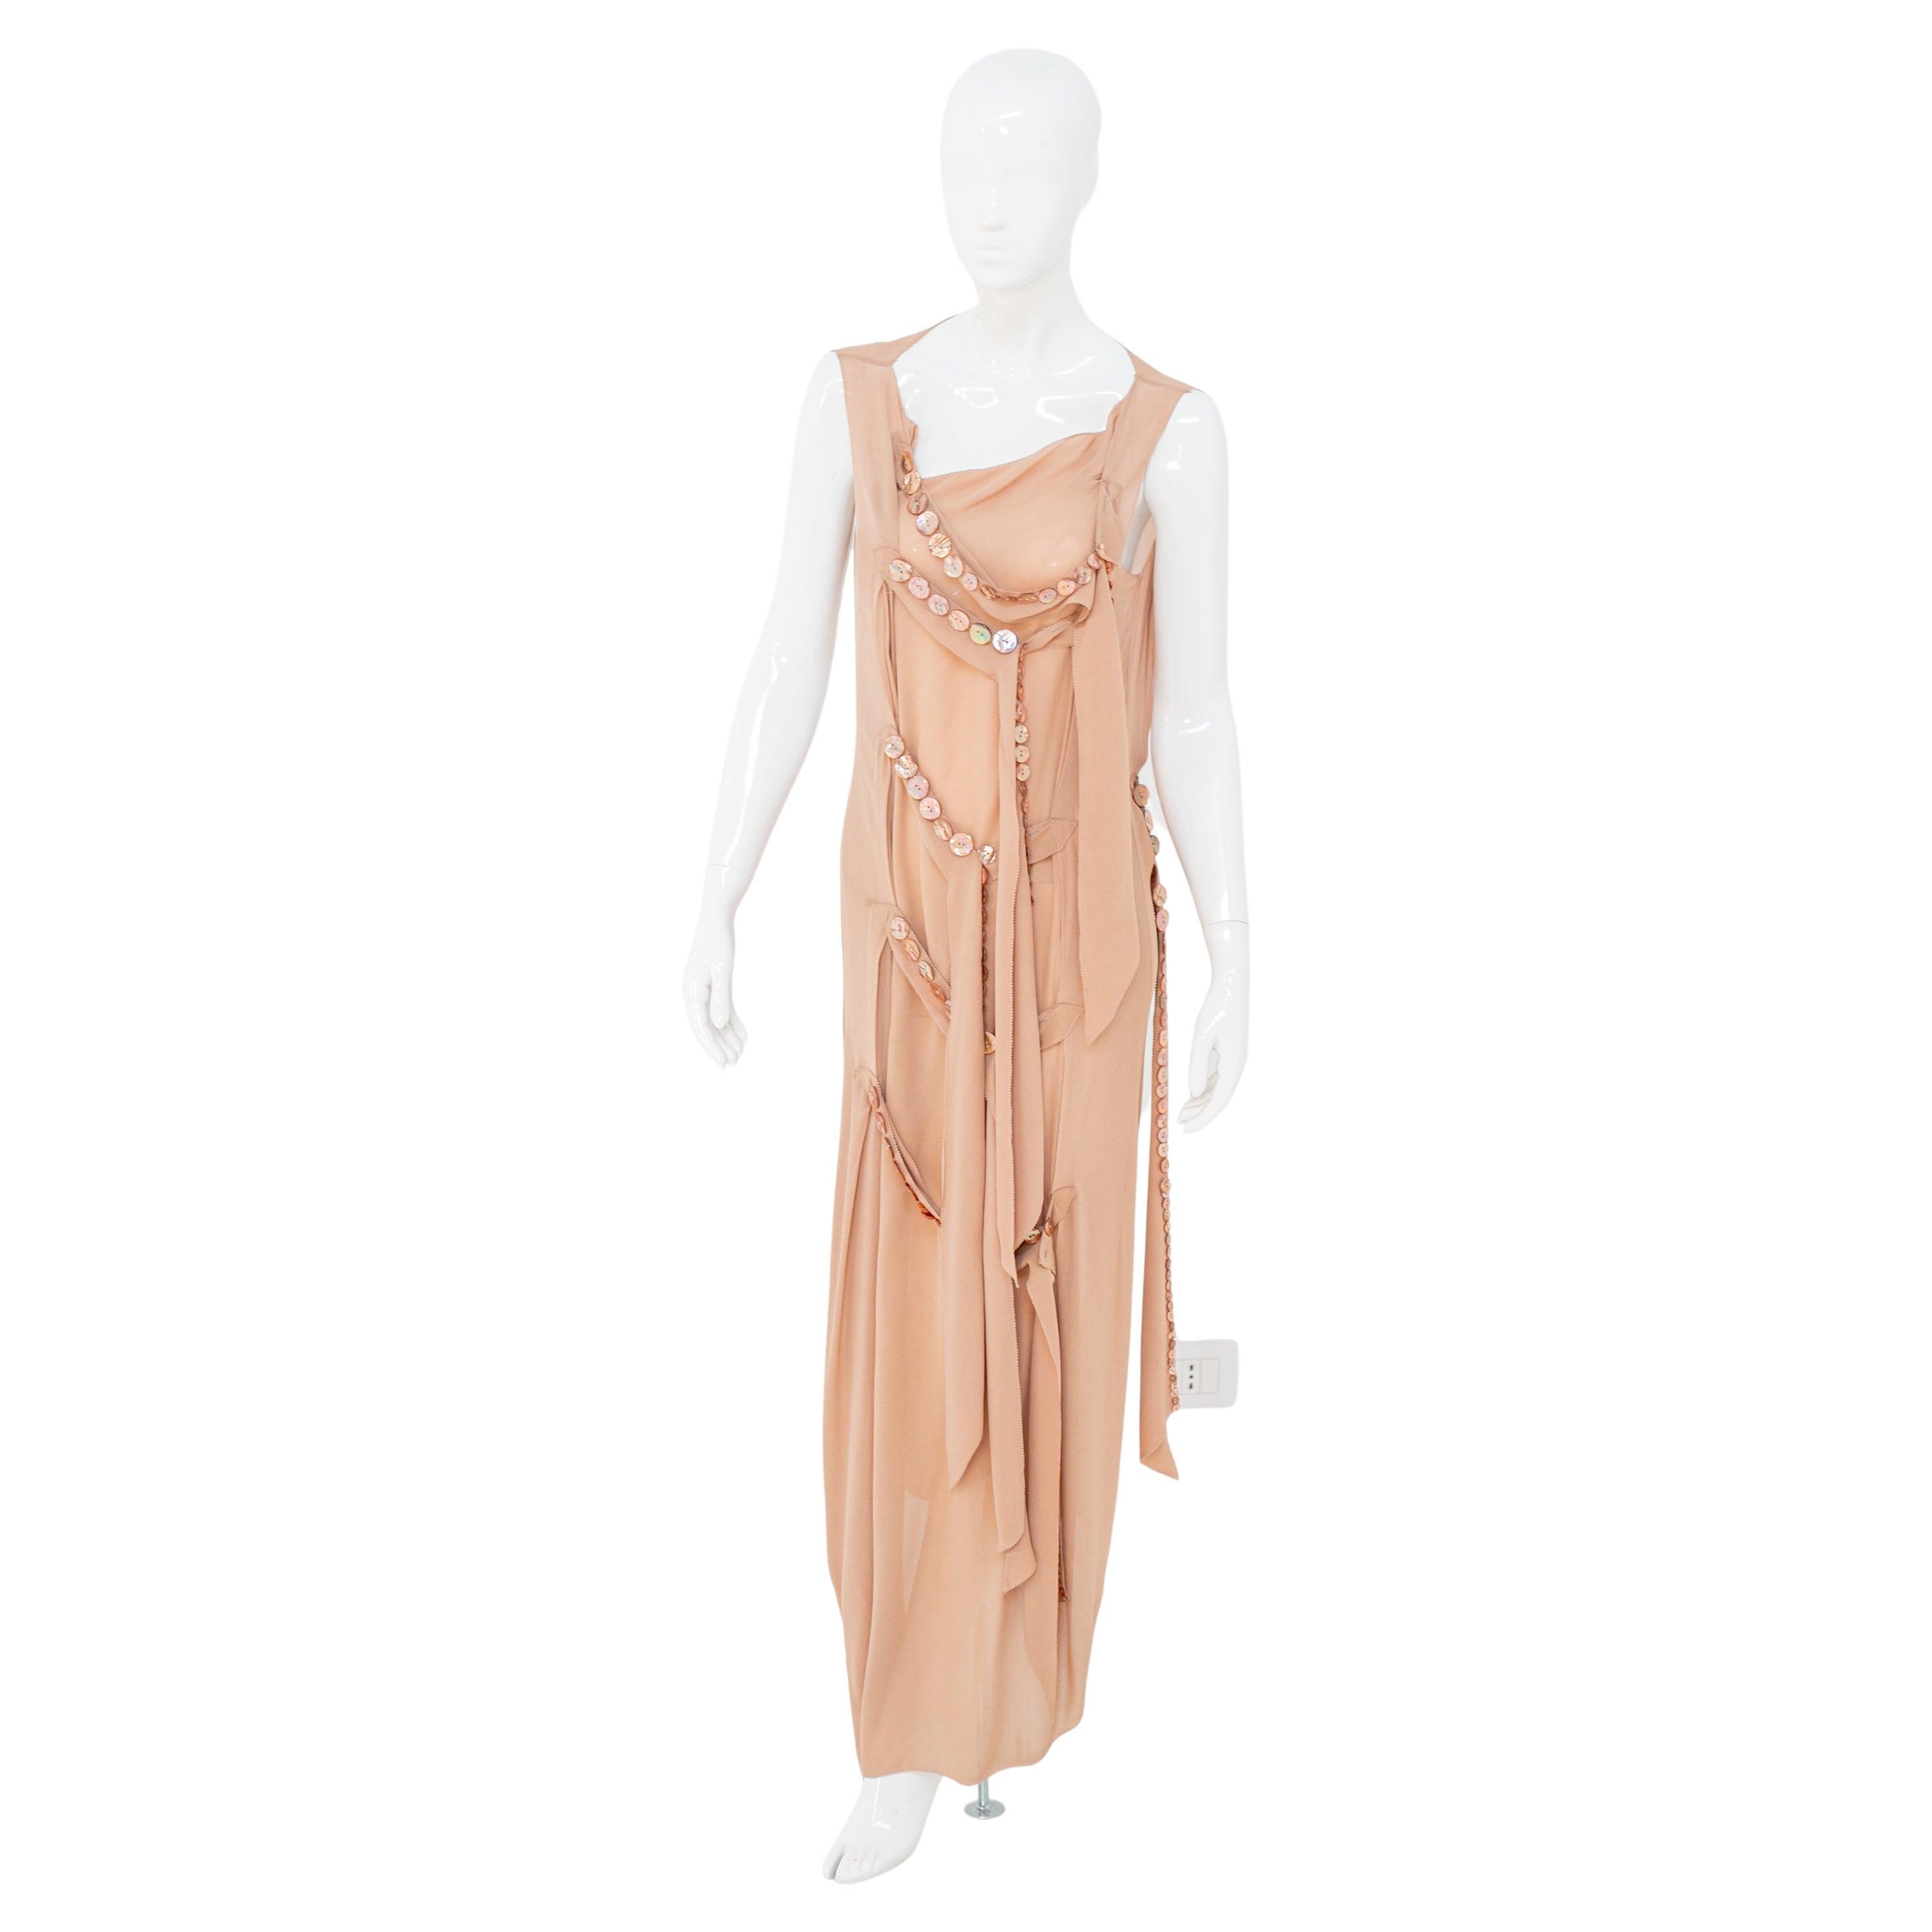 Jean Paul Gaultier Rare Evening Dress with Decorative Jewels For Sale